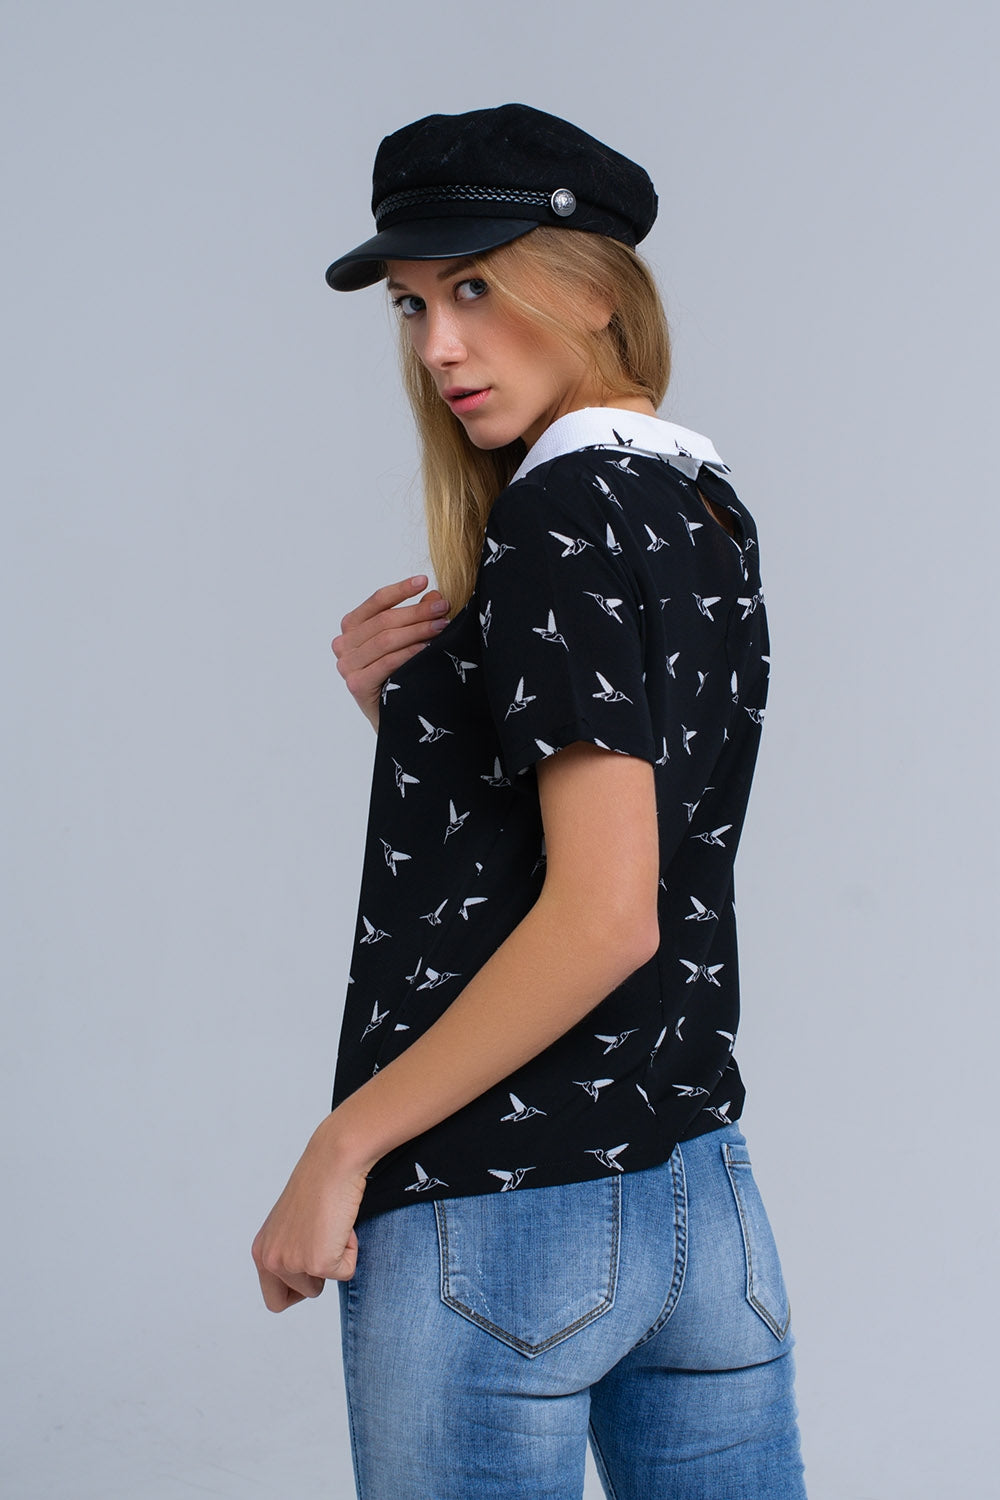 Black shirt with white printed birds Szua Store